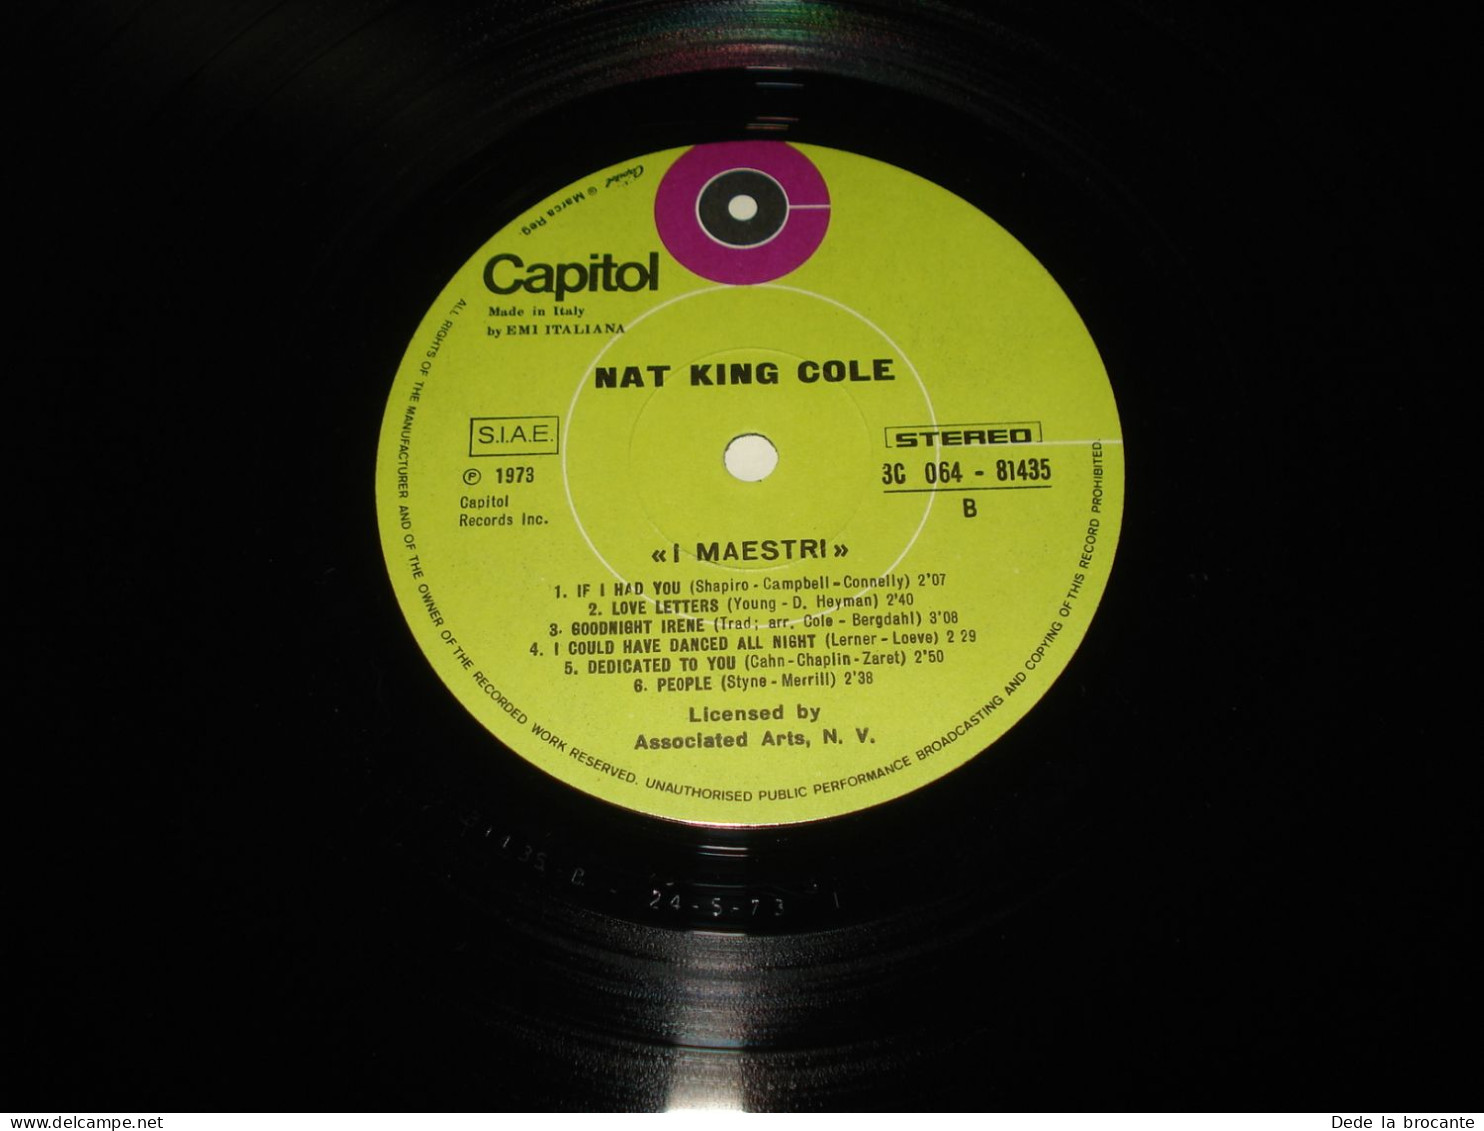 B9 / Nat King Cole  - Capitol Records  - 3C 064-81435 - Italy  1973  M/EX - Jazz